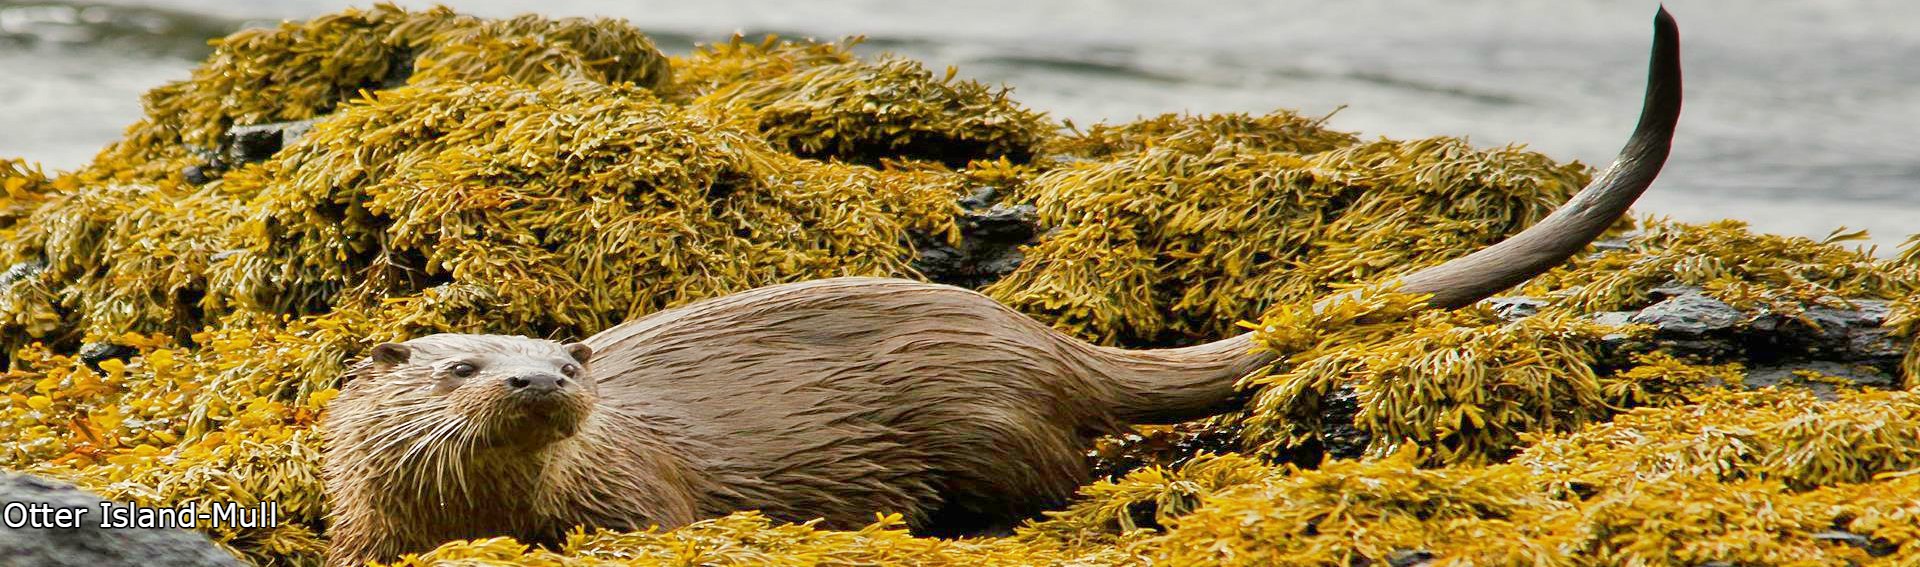 Otter,Isle of Mull